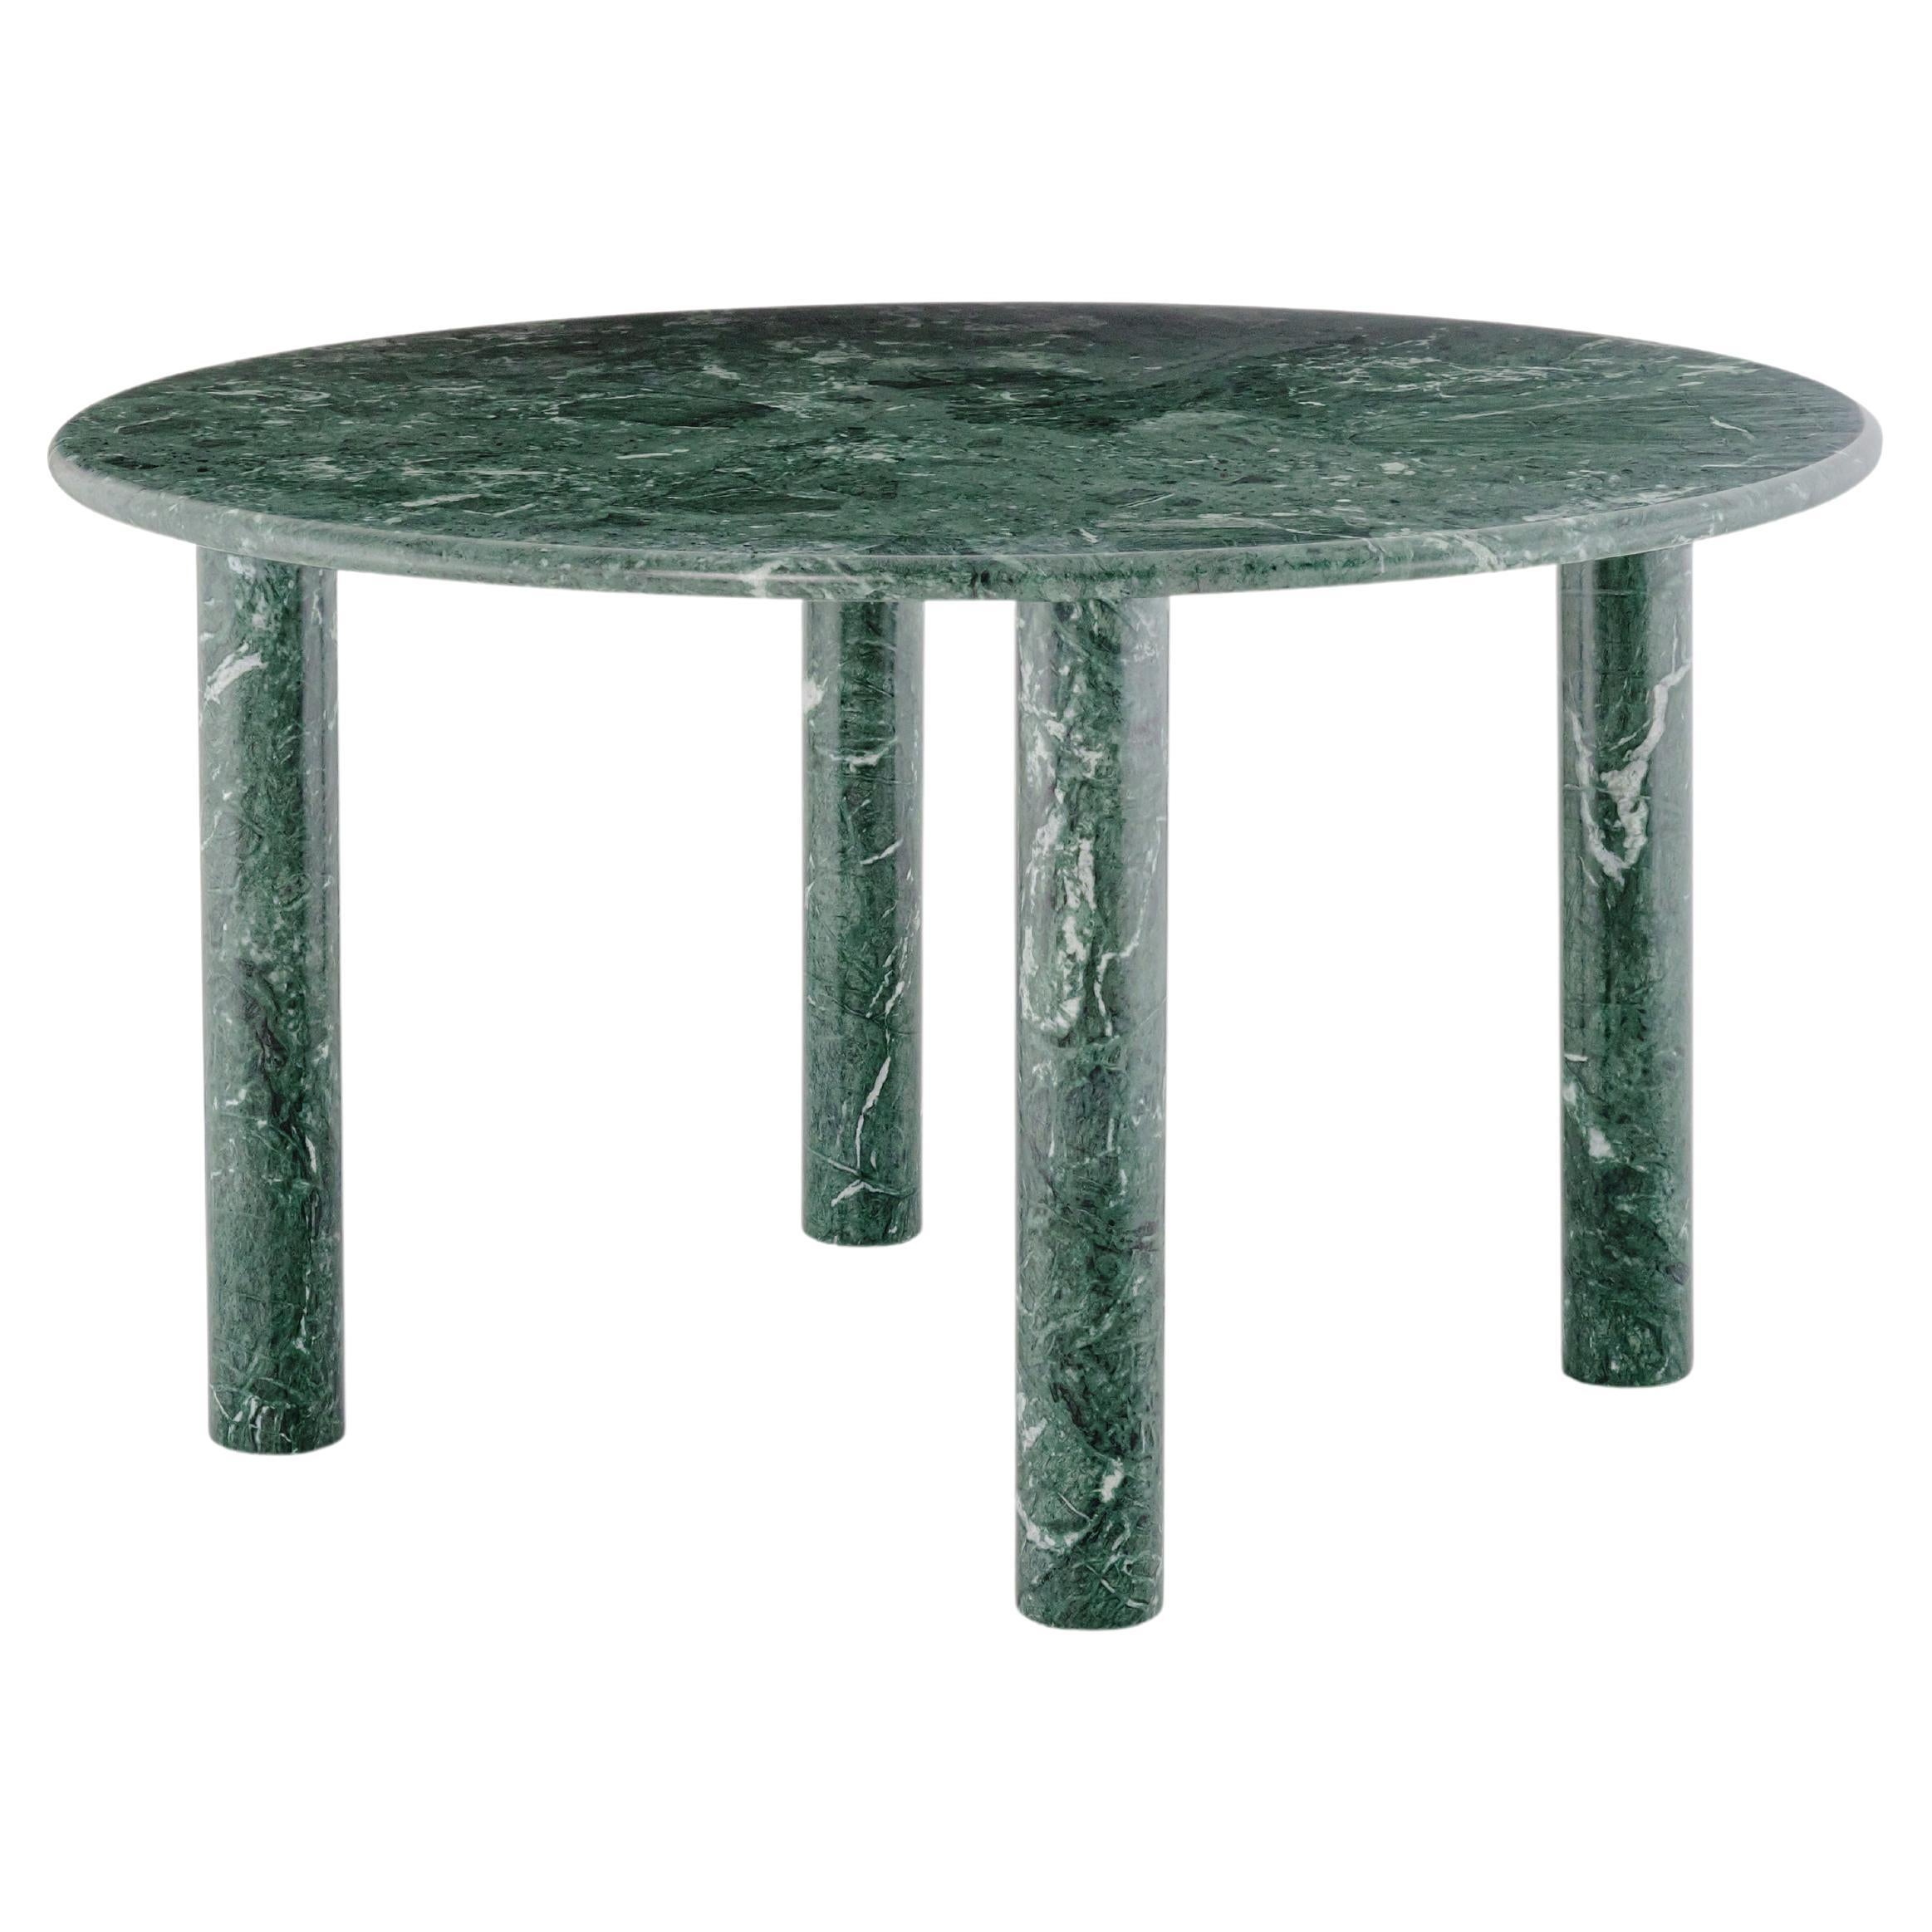 Table moderne PAUL par Noom, en marbre vert